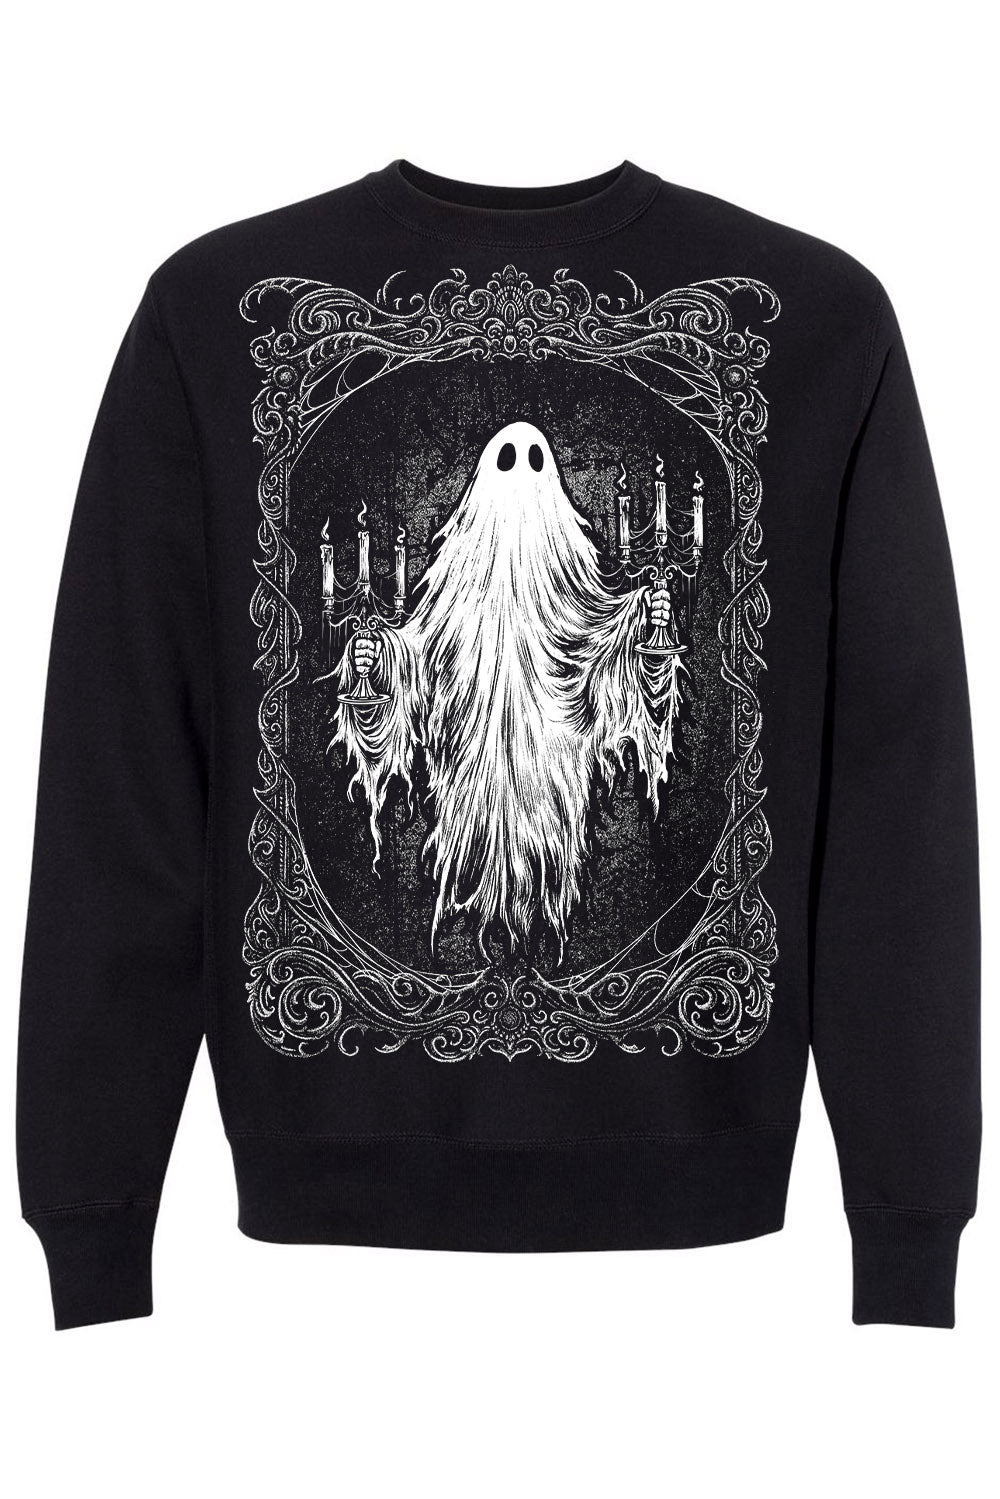 goth halloween clothing